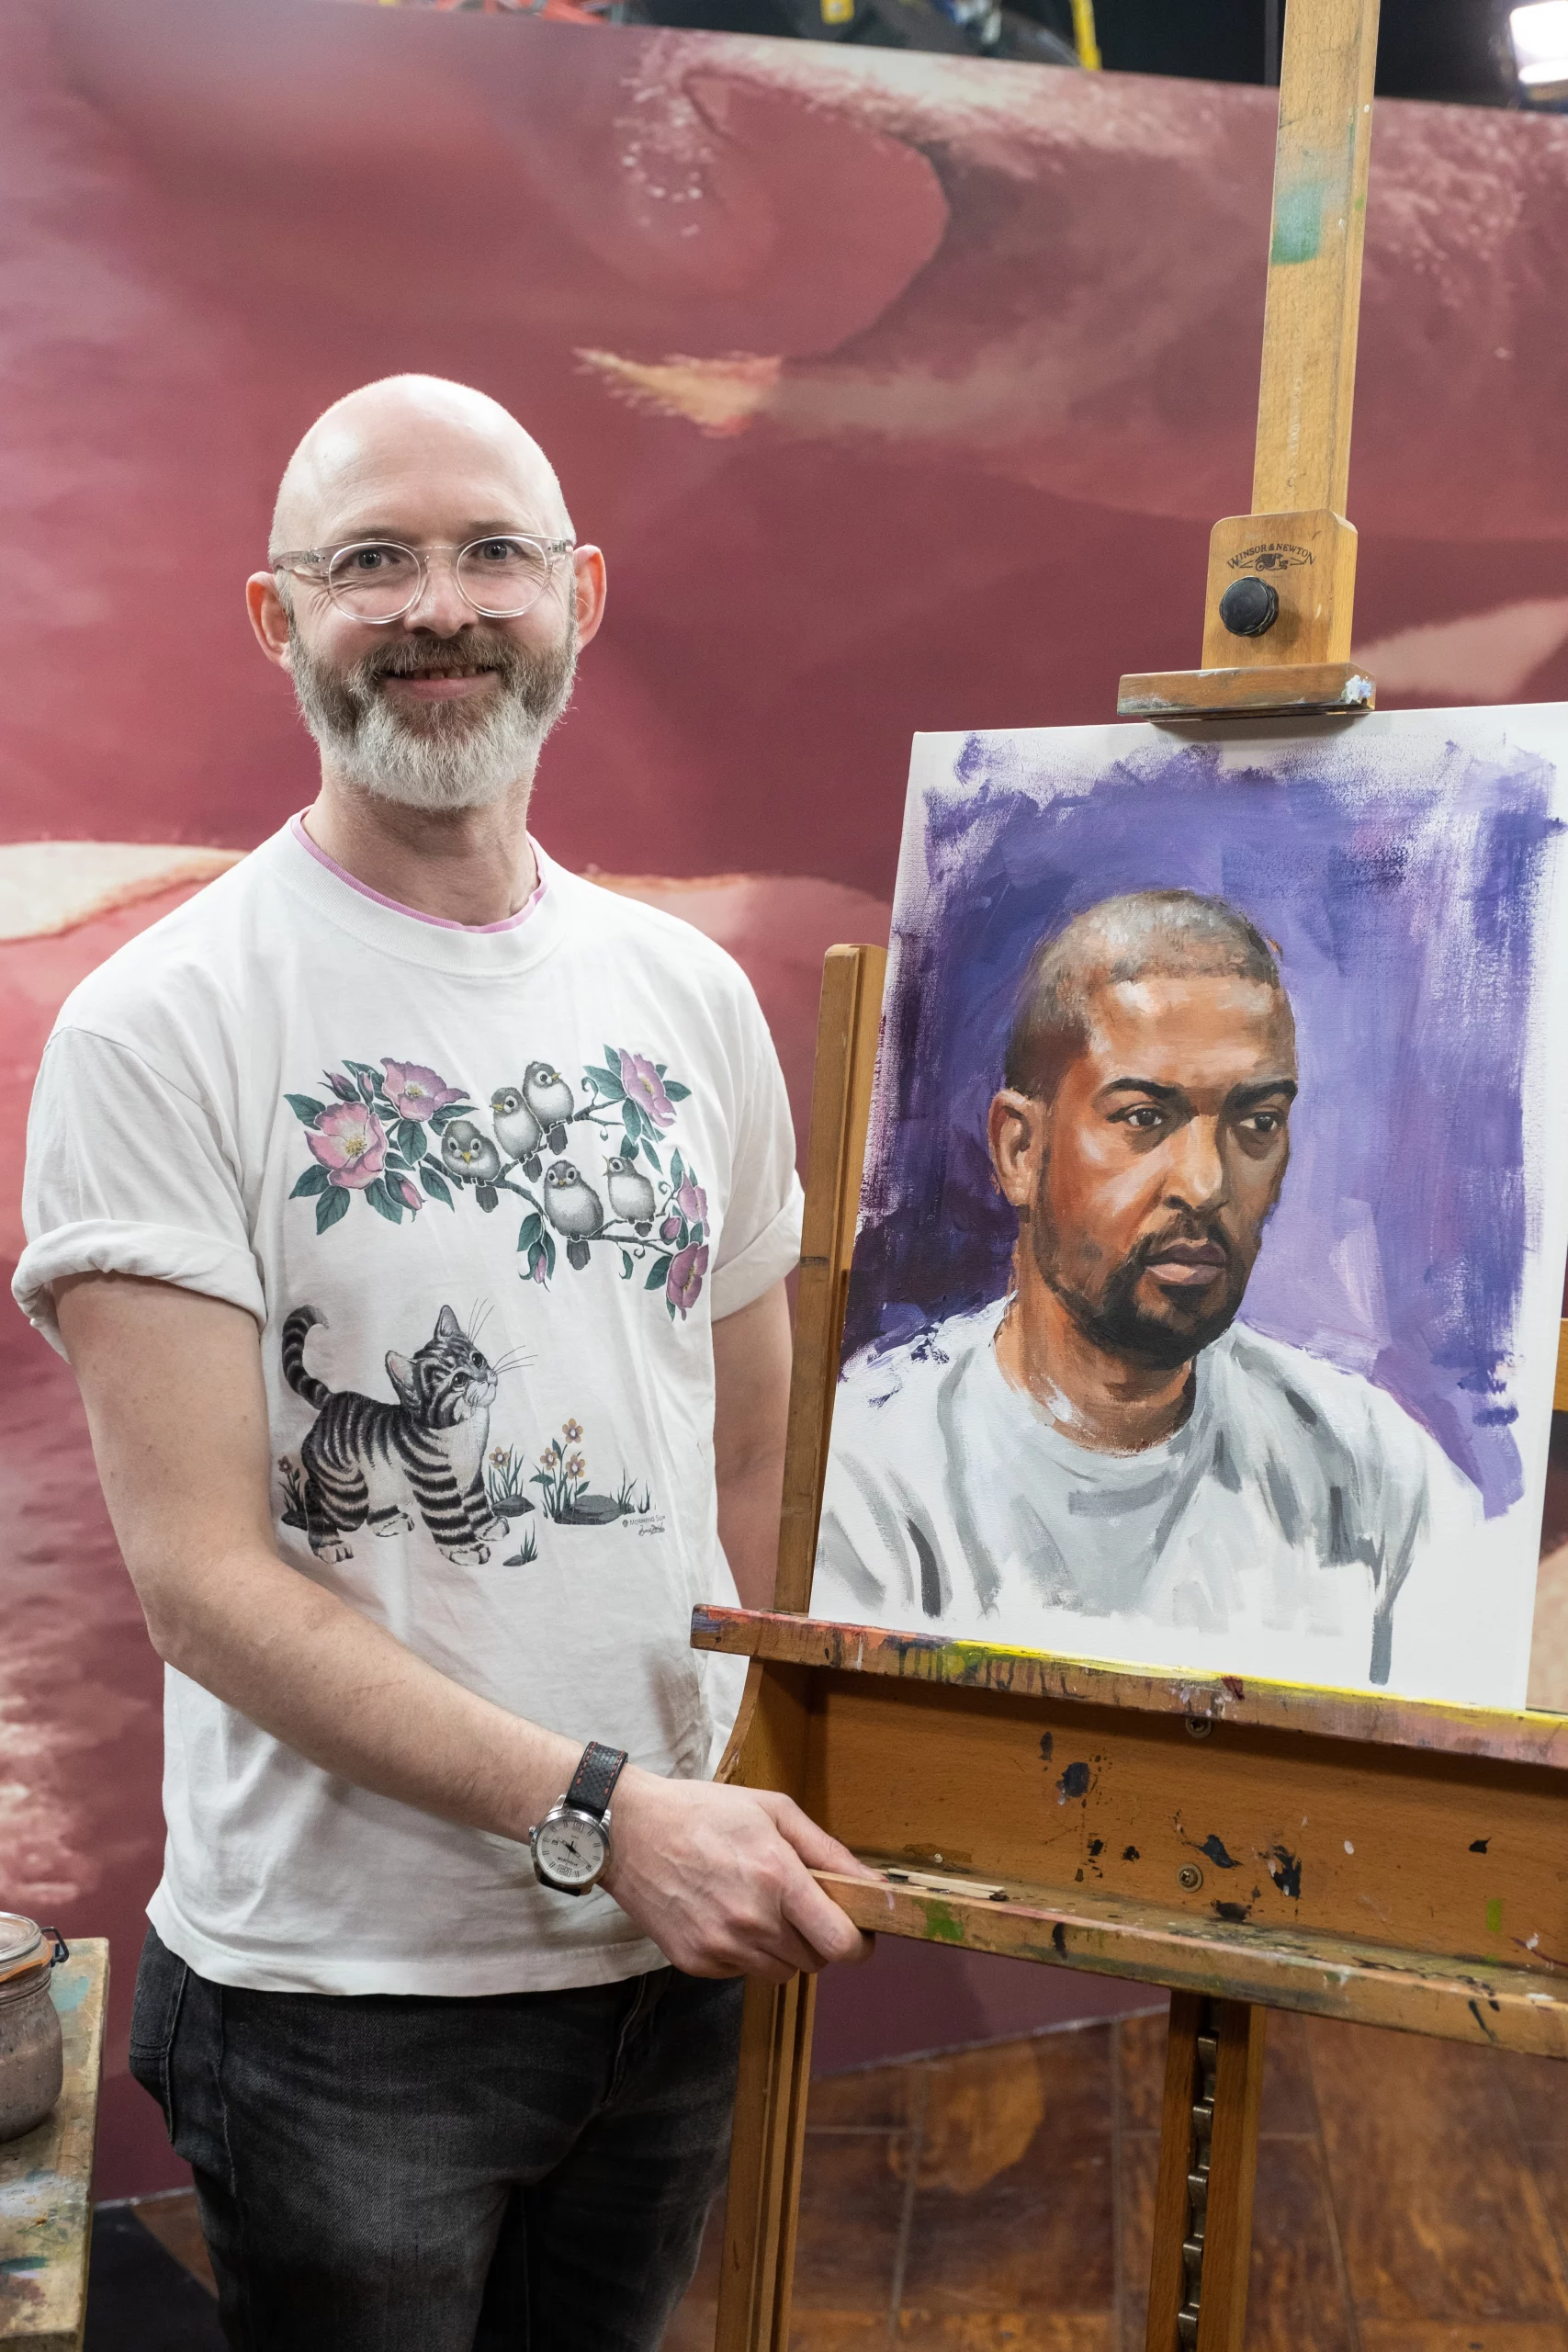 Chris-Longridge Portrait artist of the year series 2020